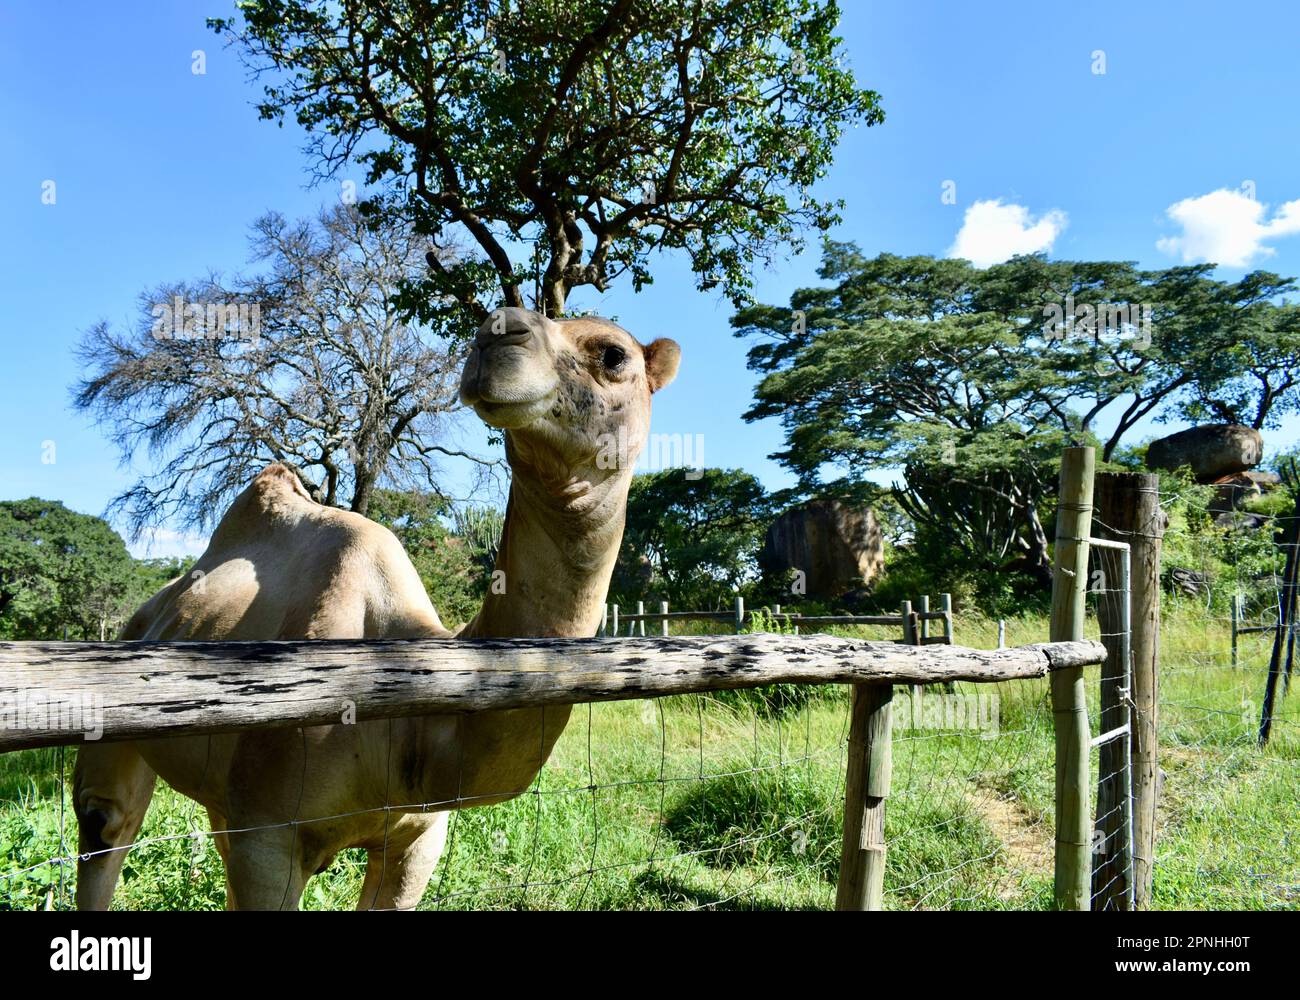 Wecloming single hump camel at the zoo in Harare, Zimbabwe Stock Photo